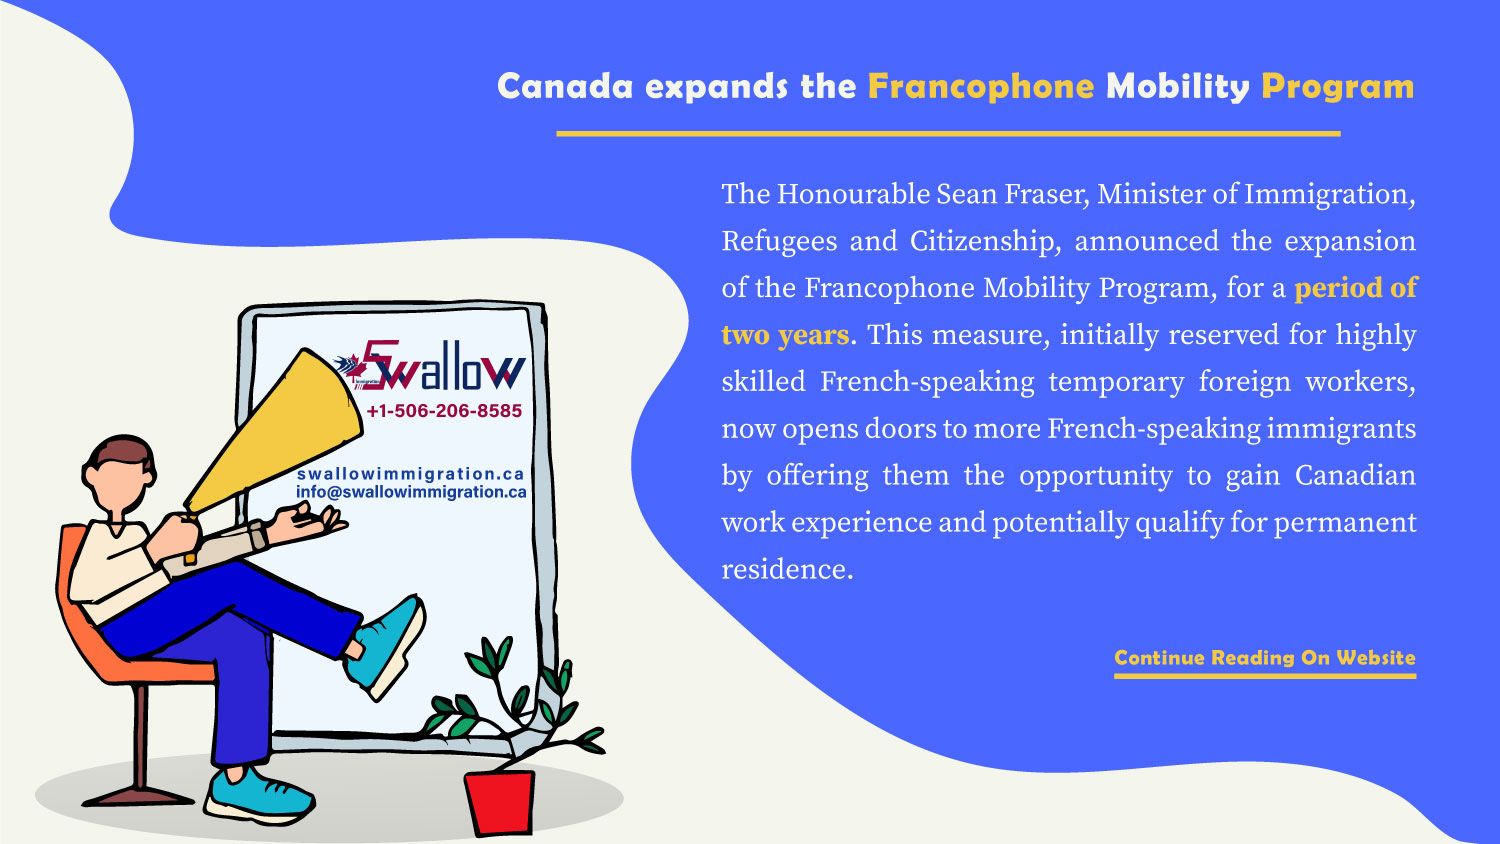 Canada expands the Francophone Mobility Program